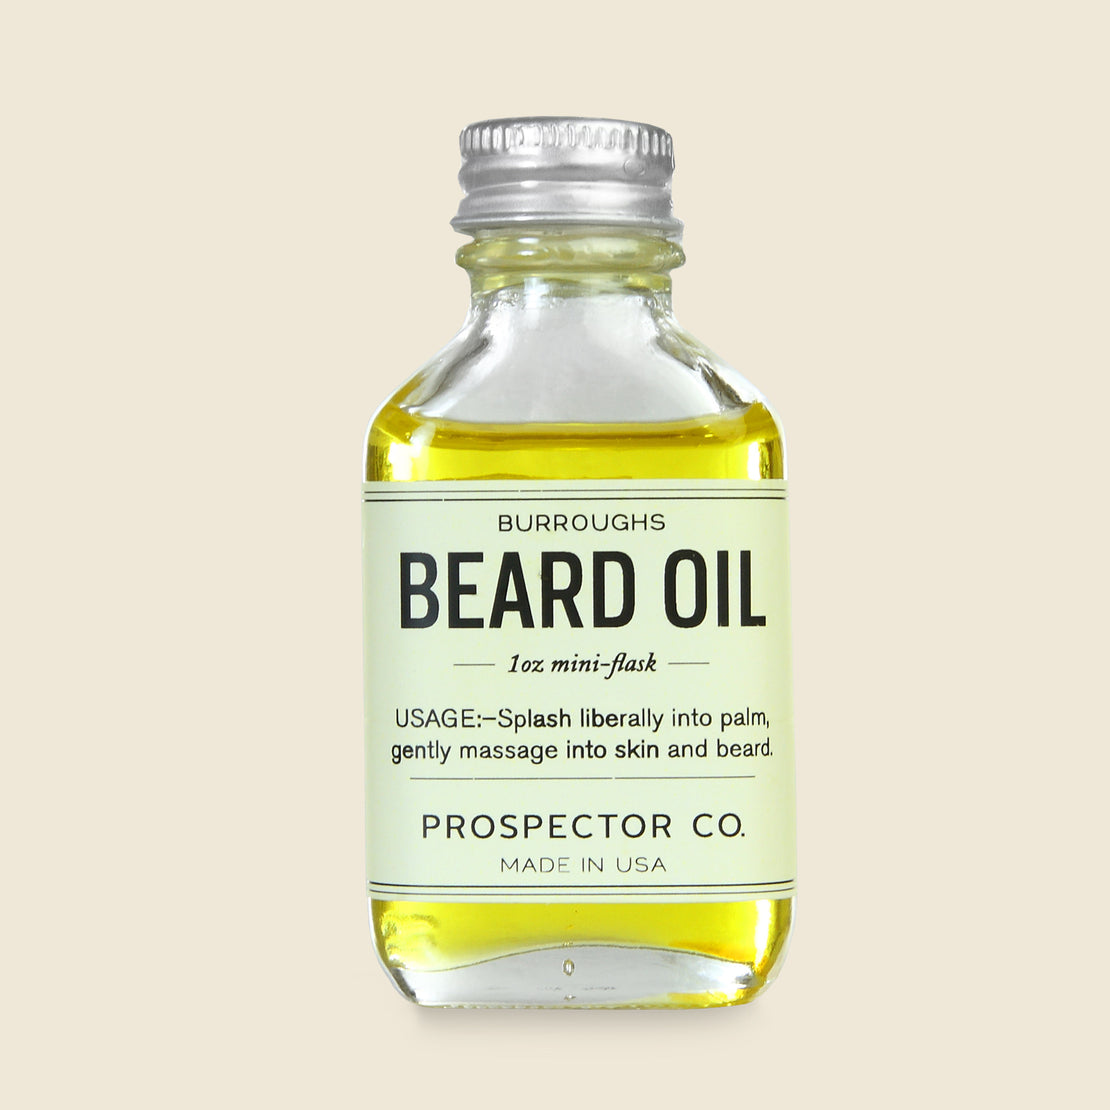 Prospector Co. Burroughs Beard Oil